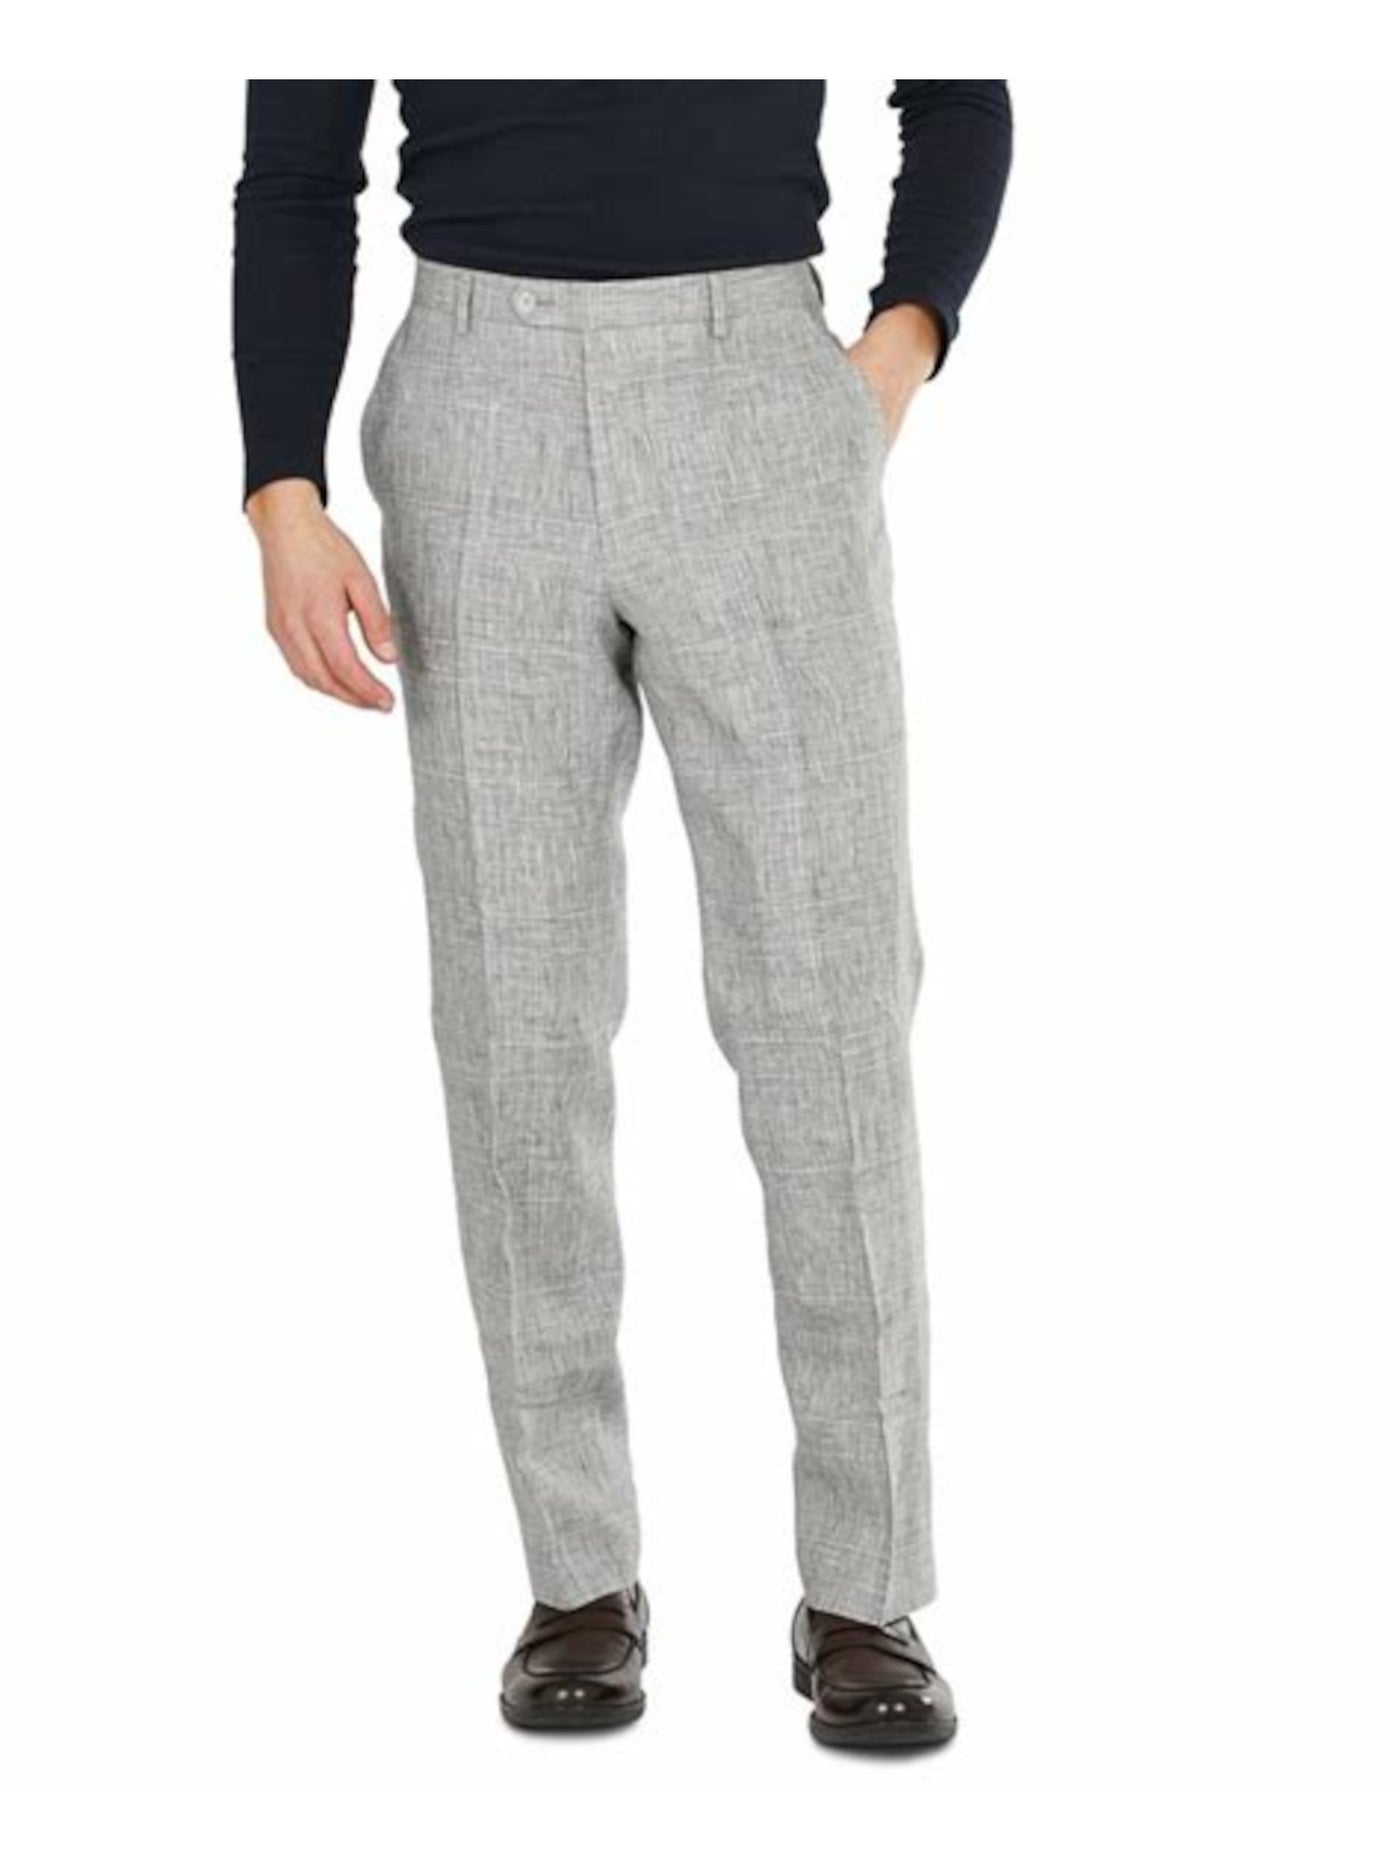 TOMMY HILFIGER Mens Gray Flat Front, Classic Fit Suit Separate Pants W33/ L32